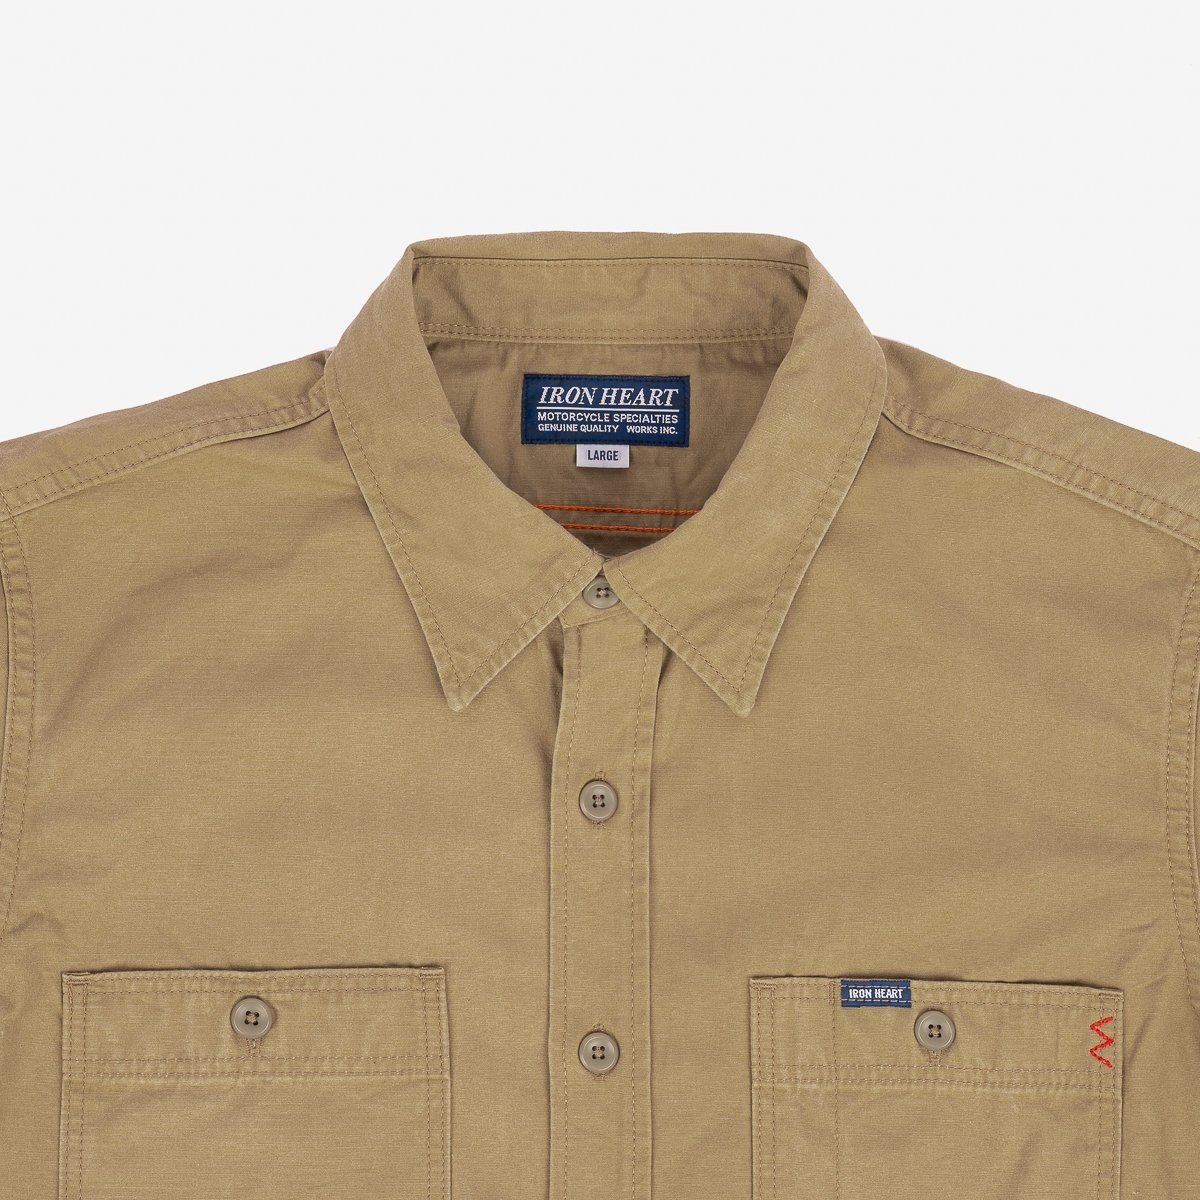 IHSH-393-KHA 7oz Fatigue Cloth Short Sleeved Work Shirt - Khaki - 6